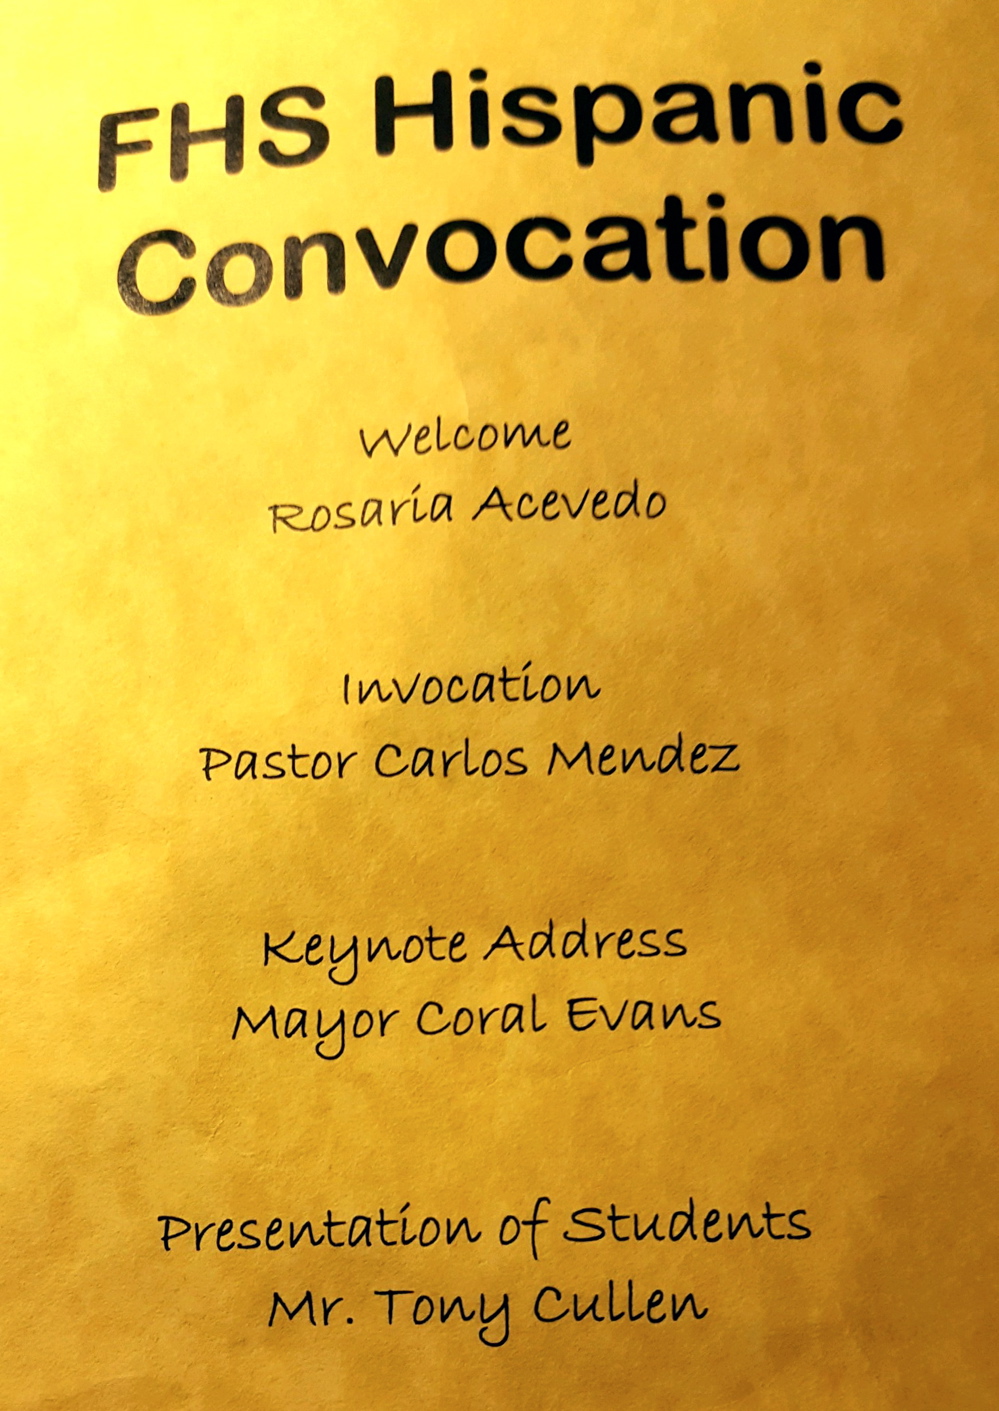 05-17-18 FHS Hispanic Convocation-012